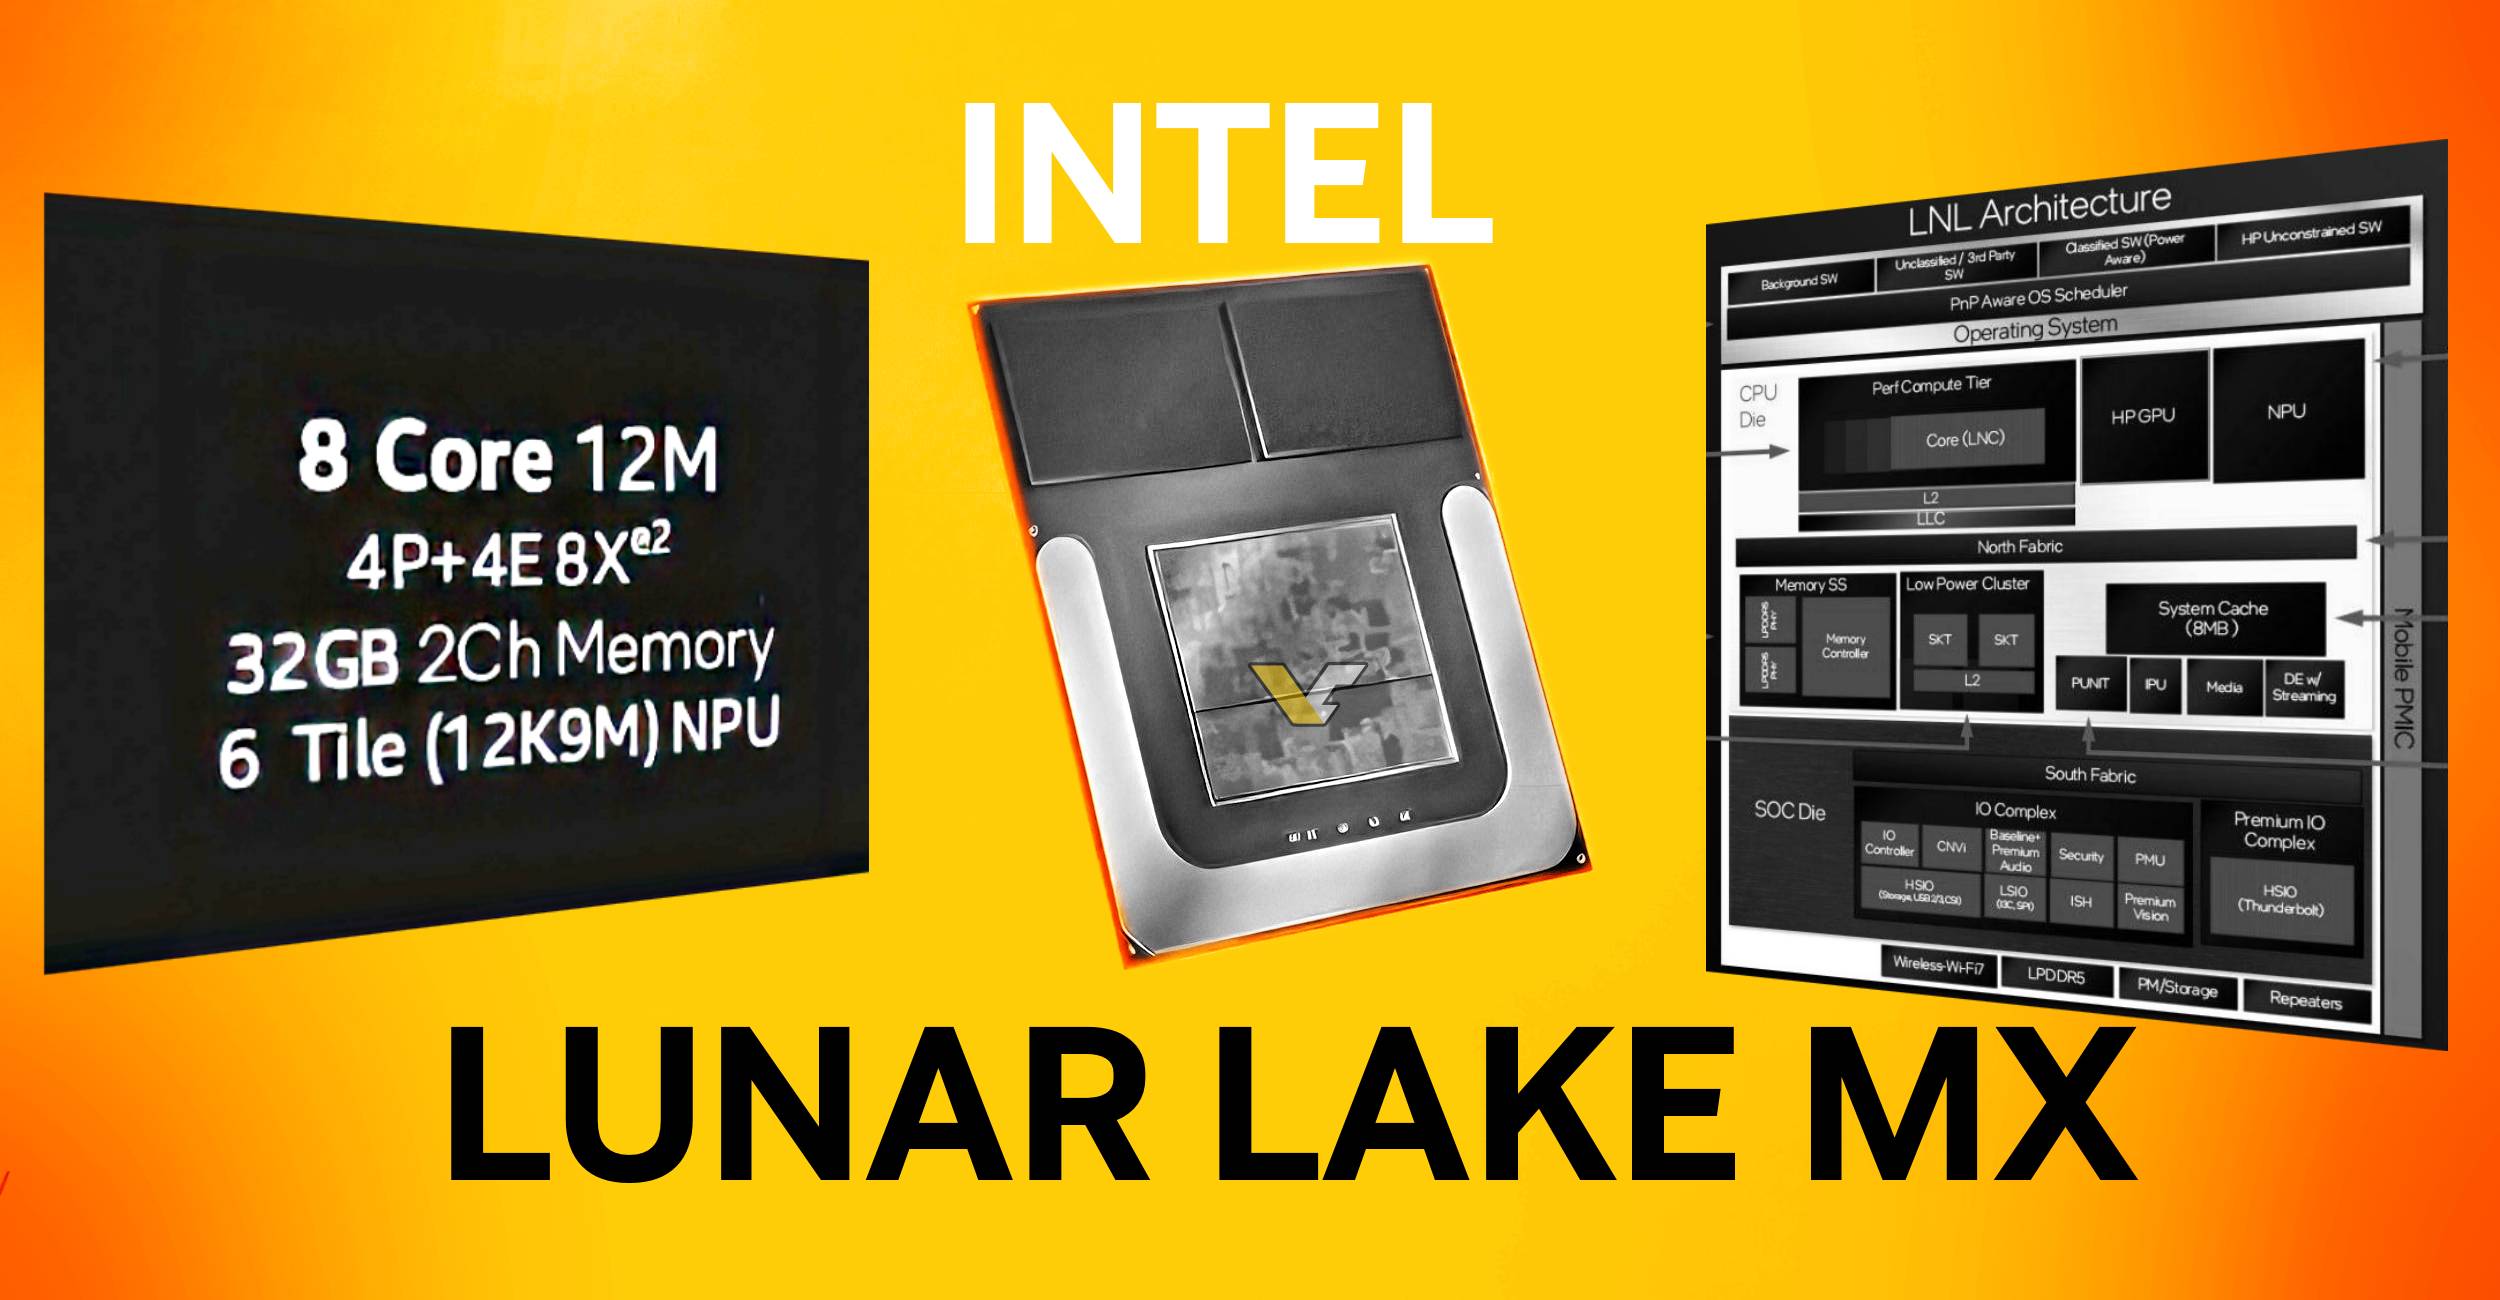 Intel Lunar Lake MX vazou: 4 + 4 núcleos de CPU, 8 núcleos de GPU Xe2, nó TSMC N3B e suporte para DisplayPort 2.1